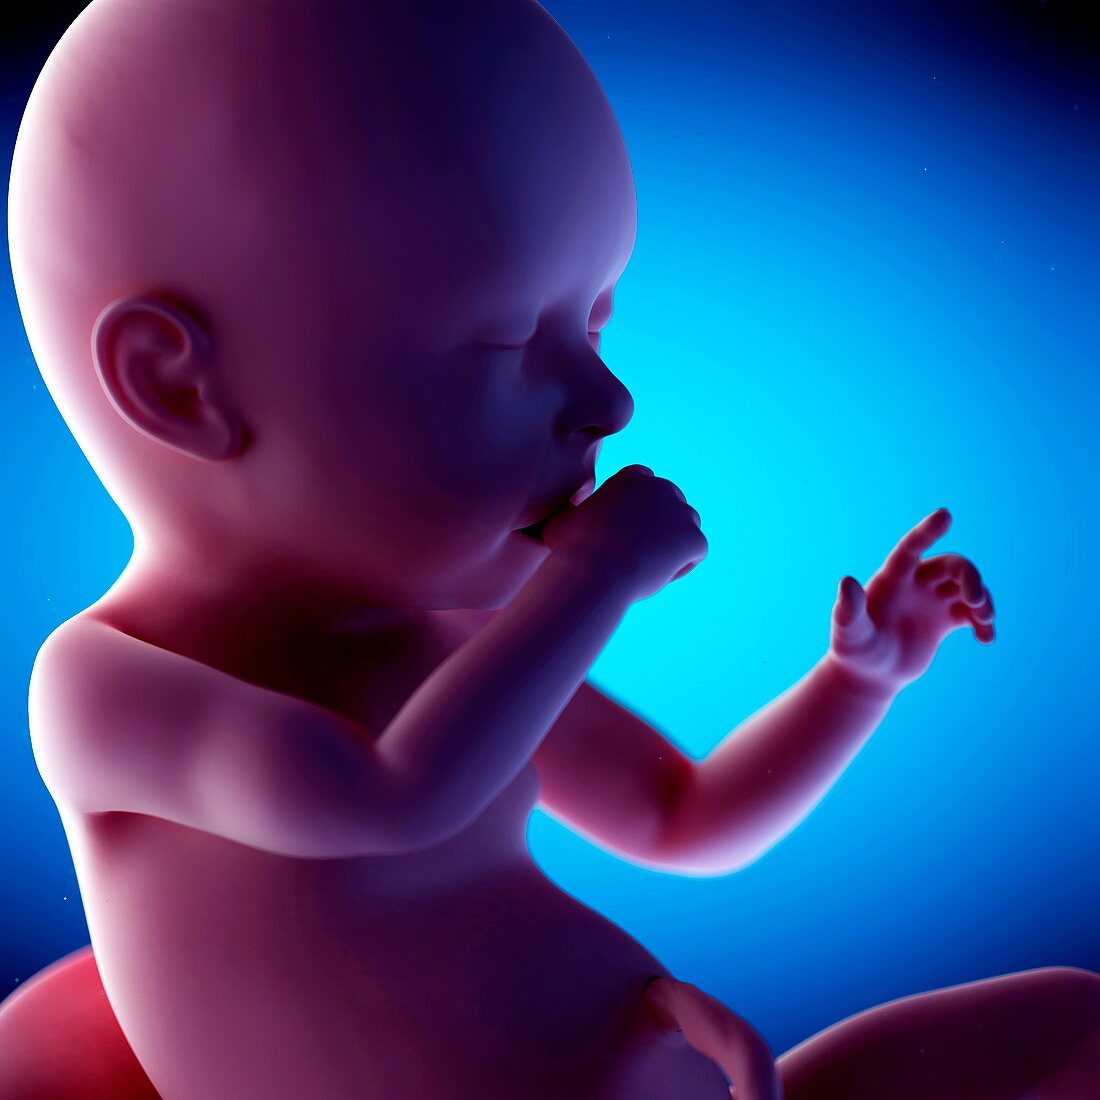 Human fetus at week 40 of gestation, illustration